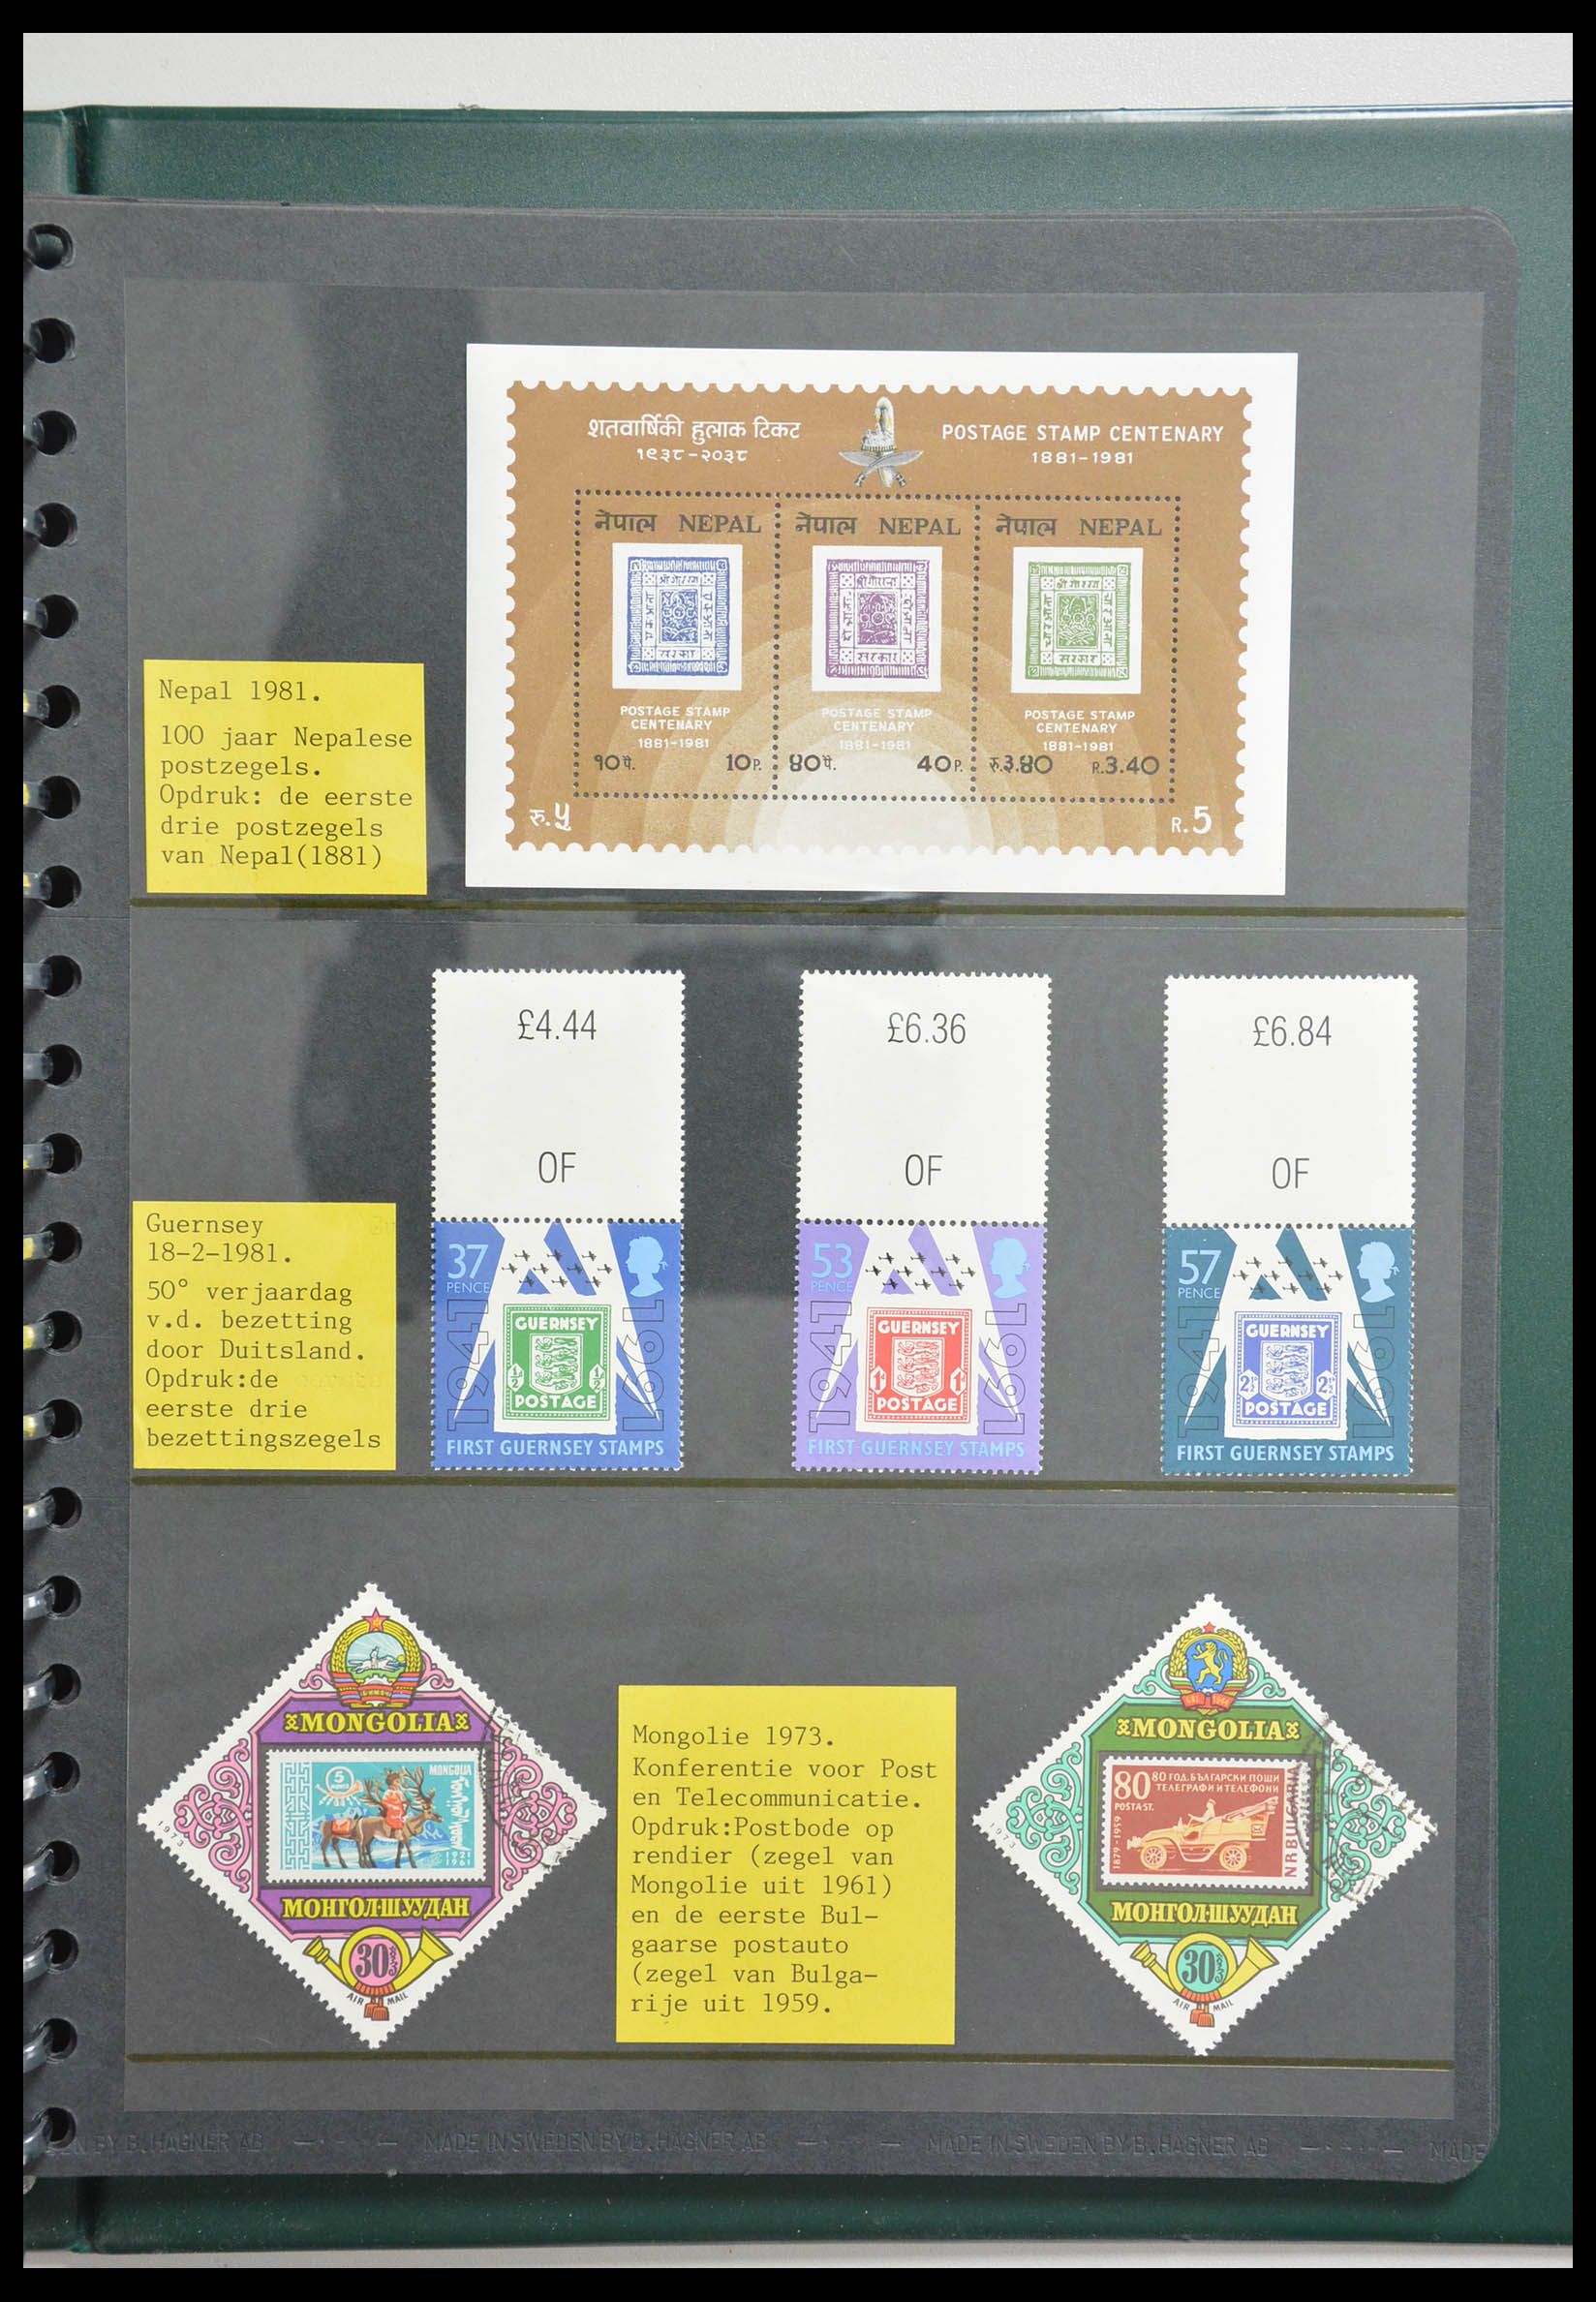 28337 129 - 28337 Postzegel op postzegel 1840-2001.